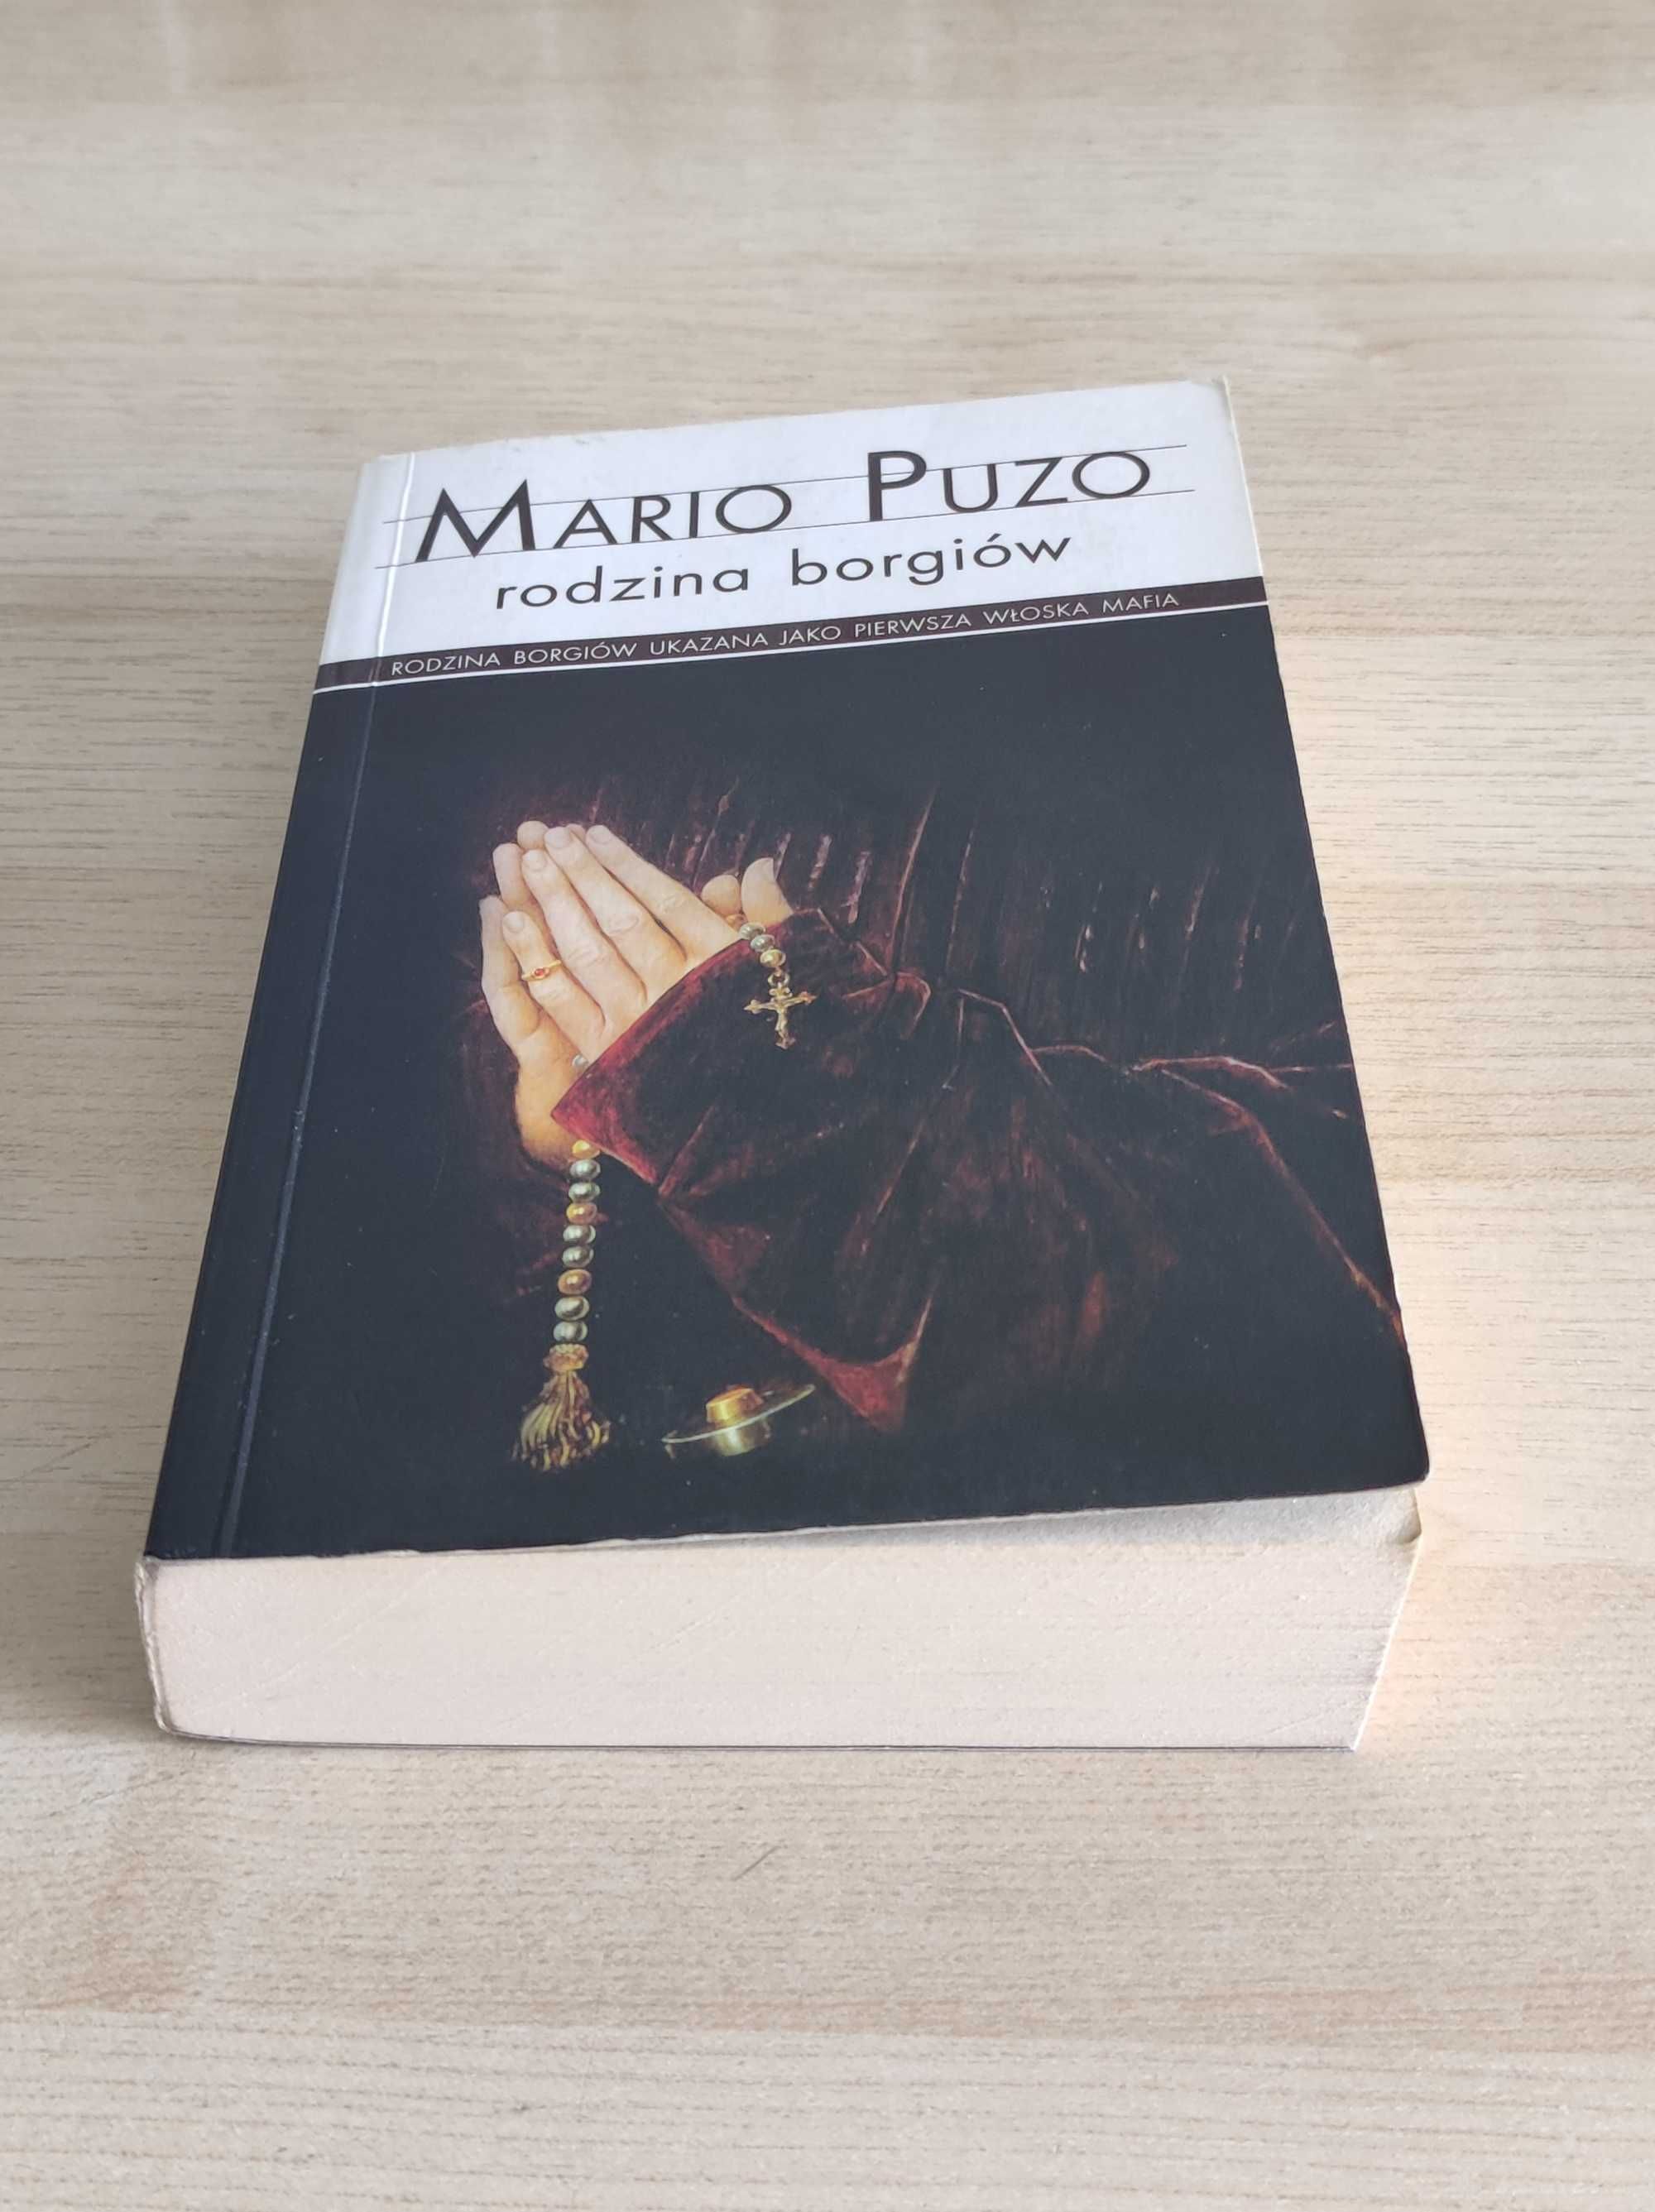 Mario Puzo - "Rodzina Borgiów"